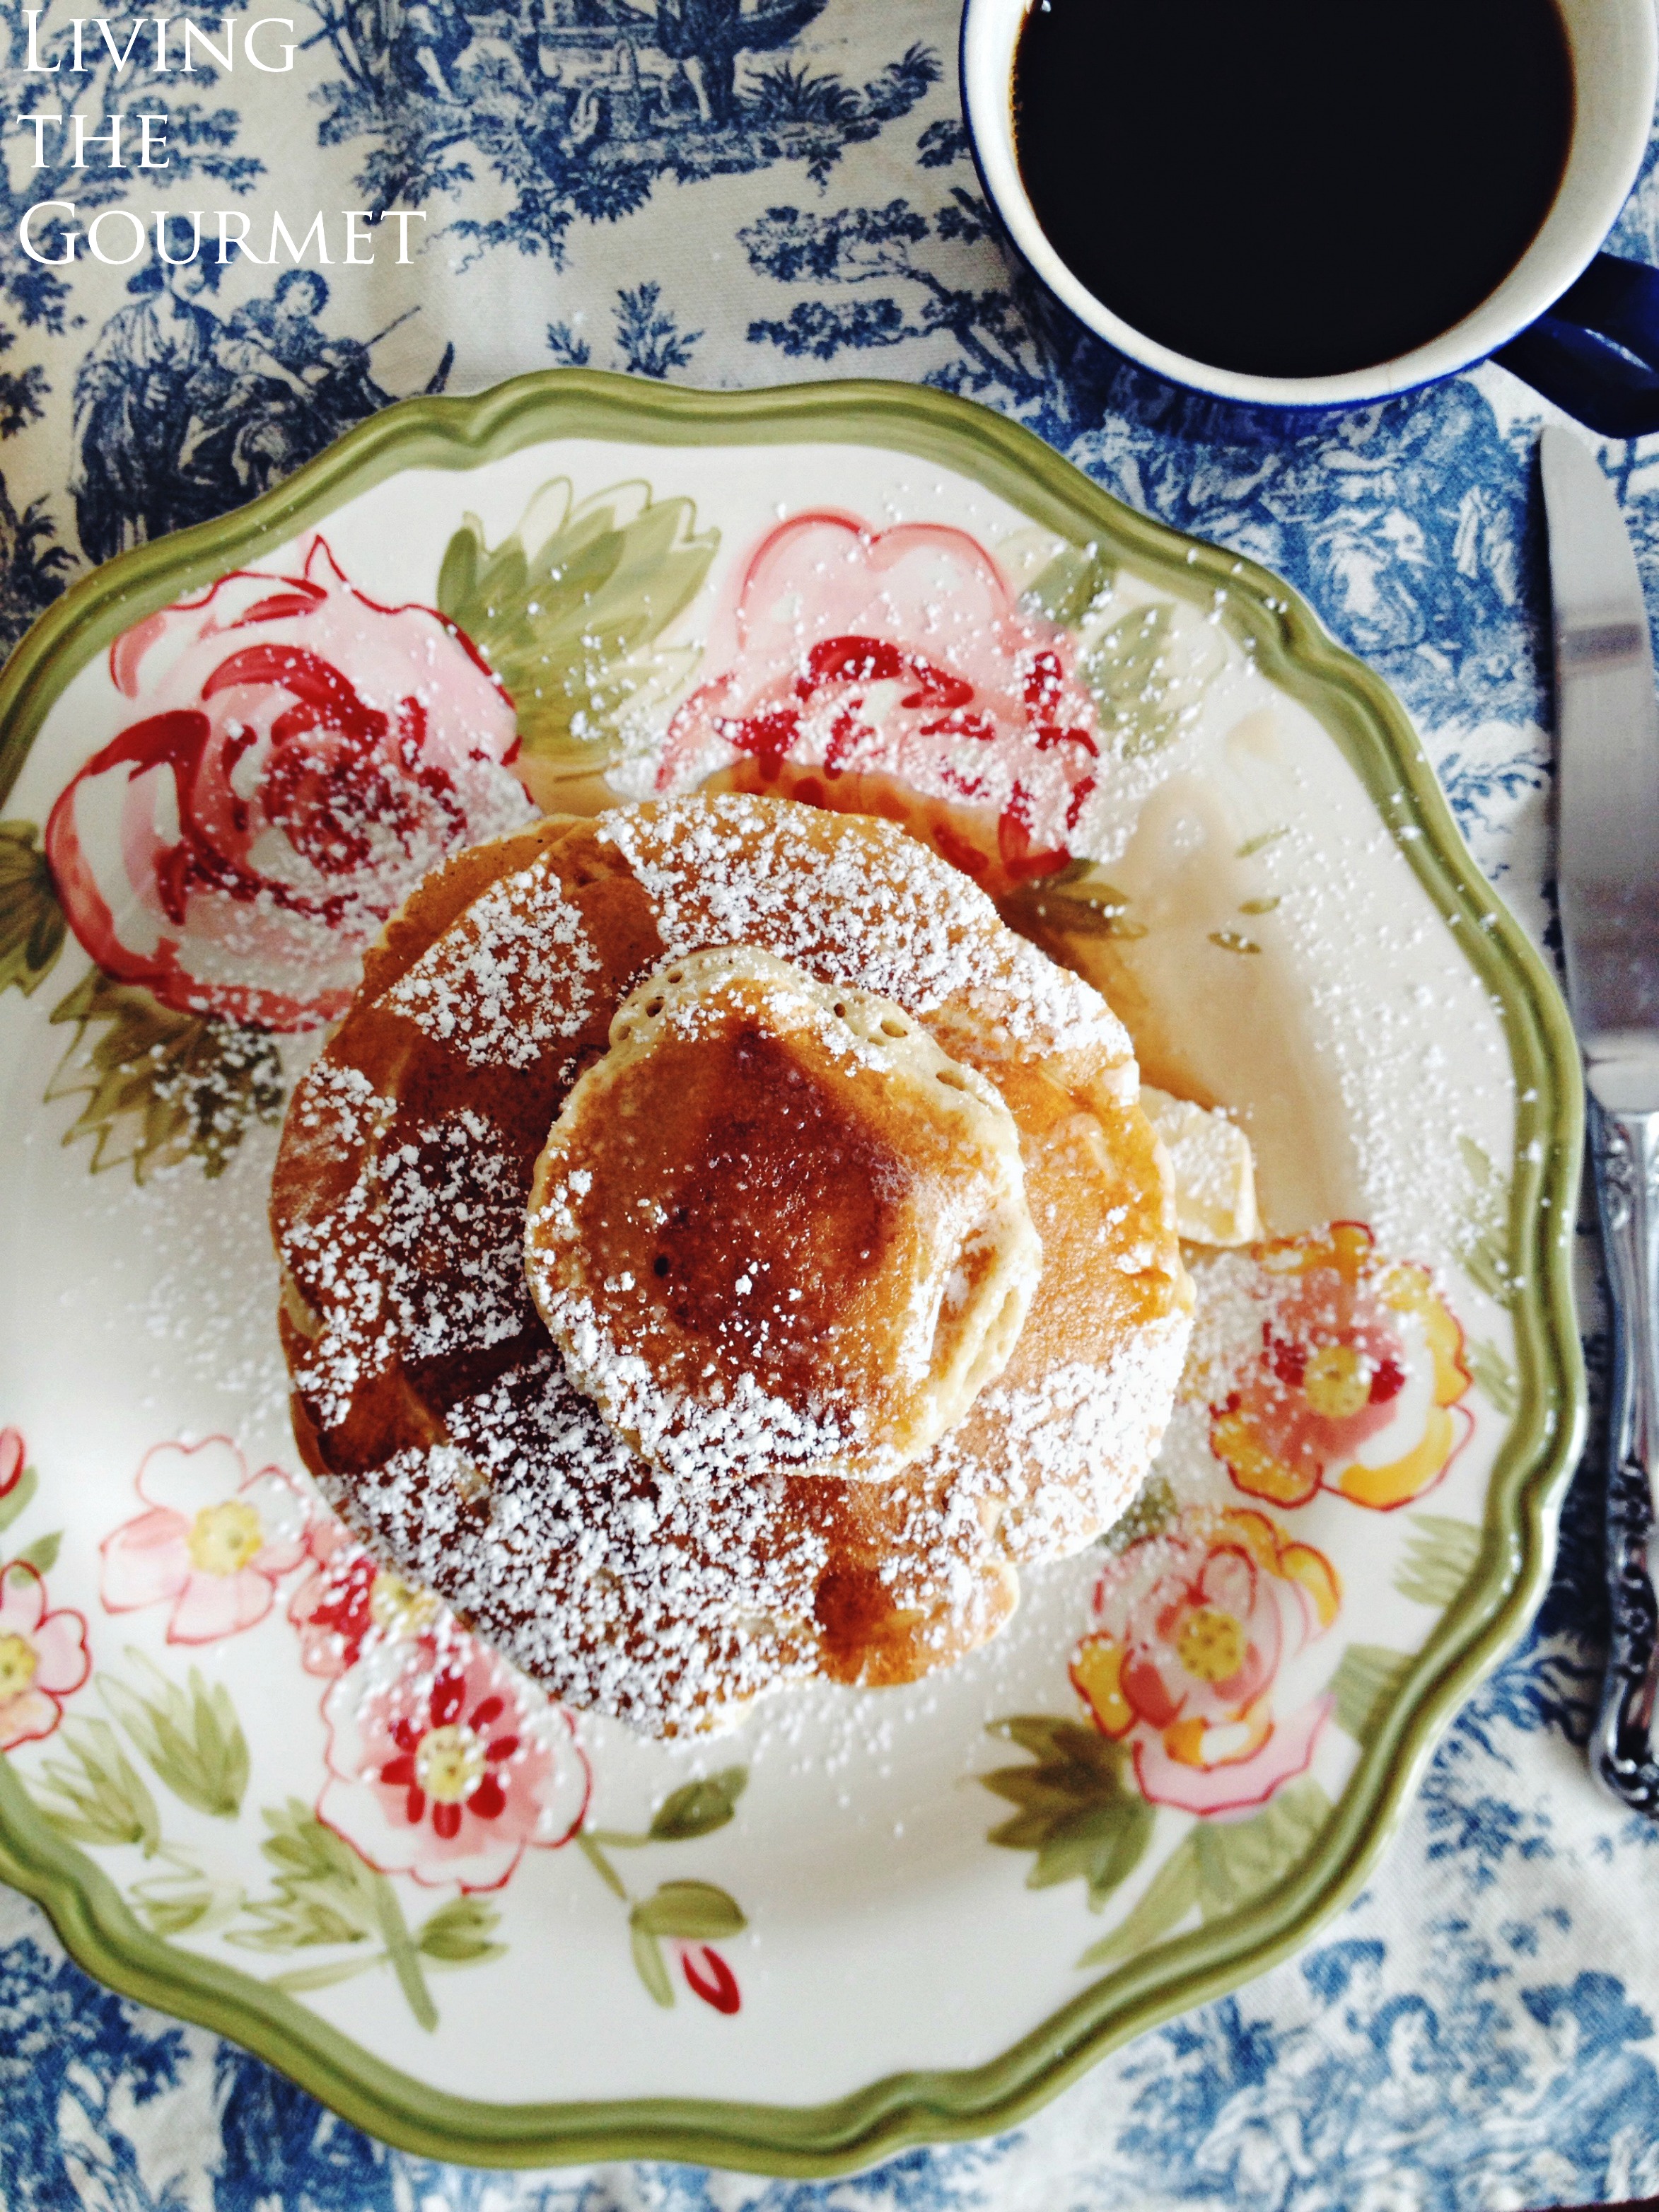 Living the Gourmet: Apple Pancakes